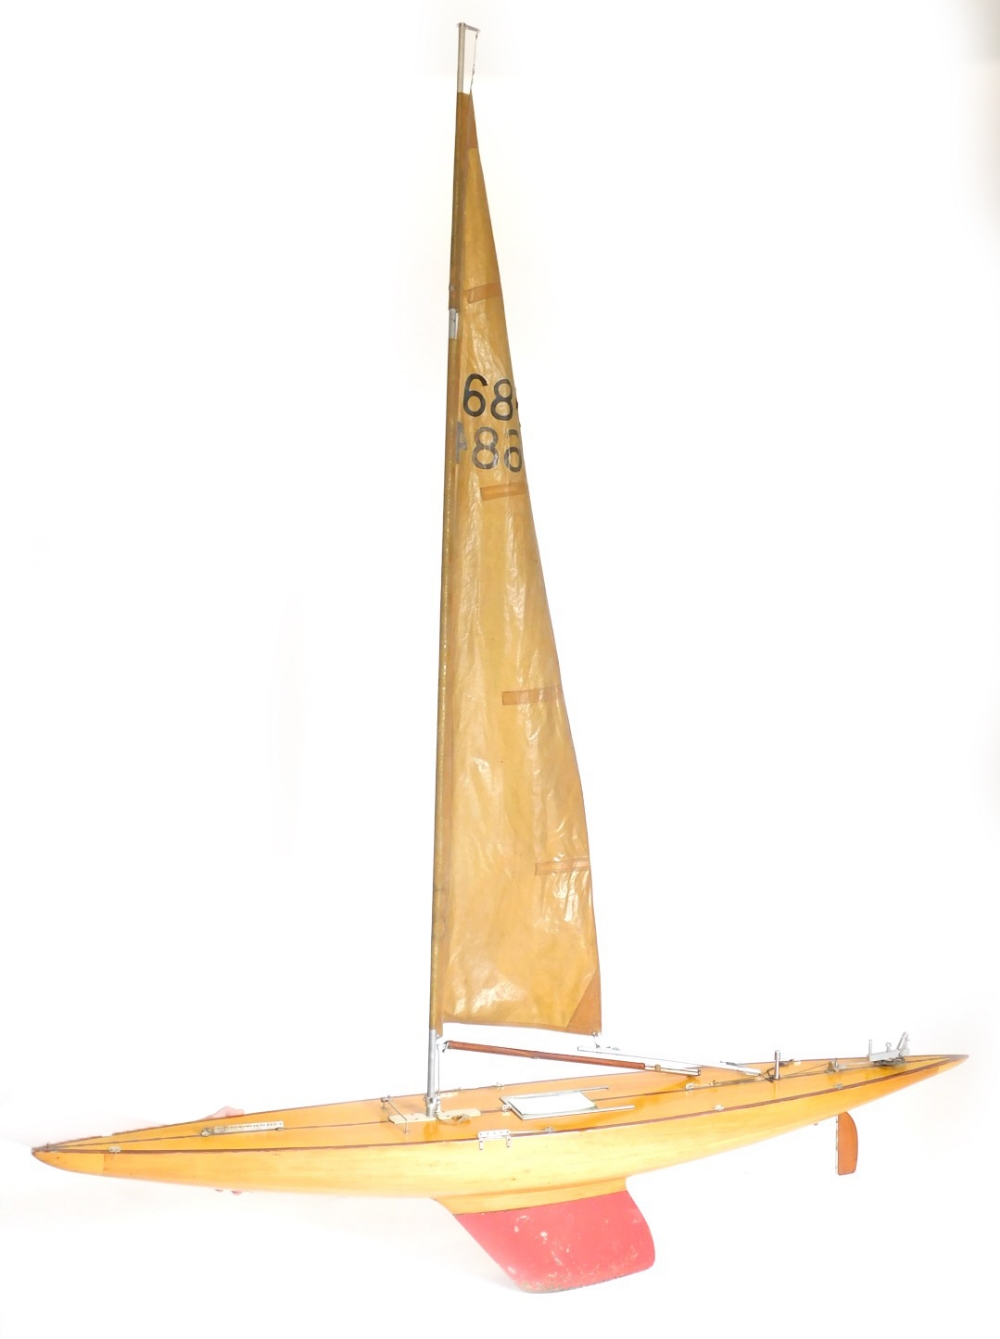 A 1960s/ 70s canoe stern ten raiter plank on frame pond yacht, pennant number 1684, 193cm wide.